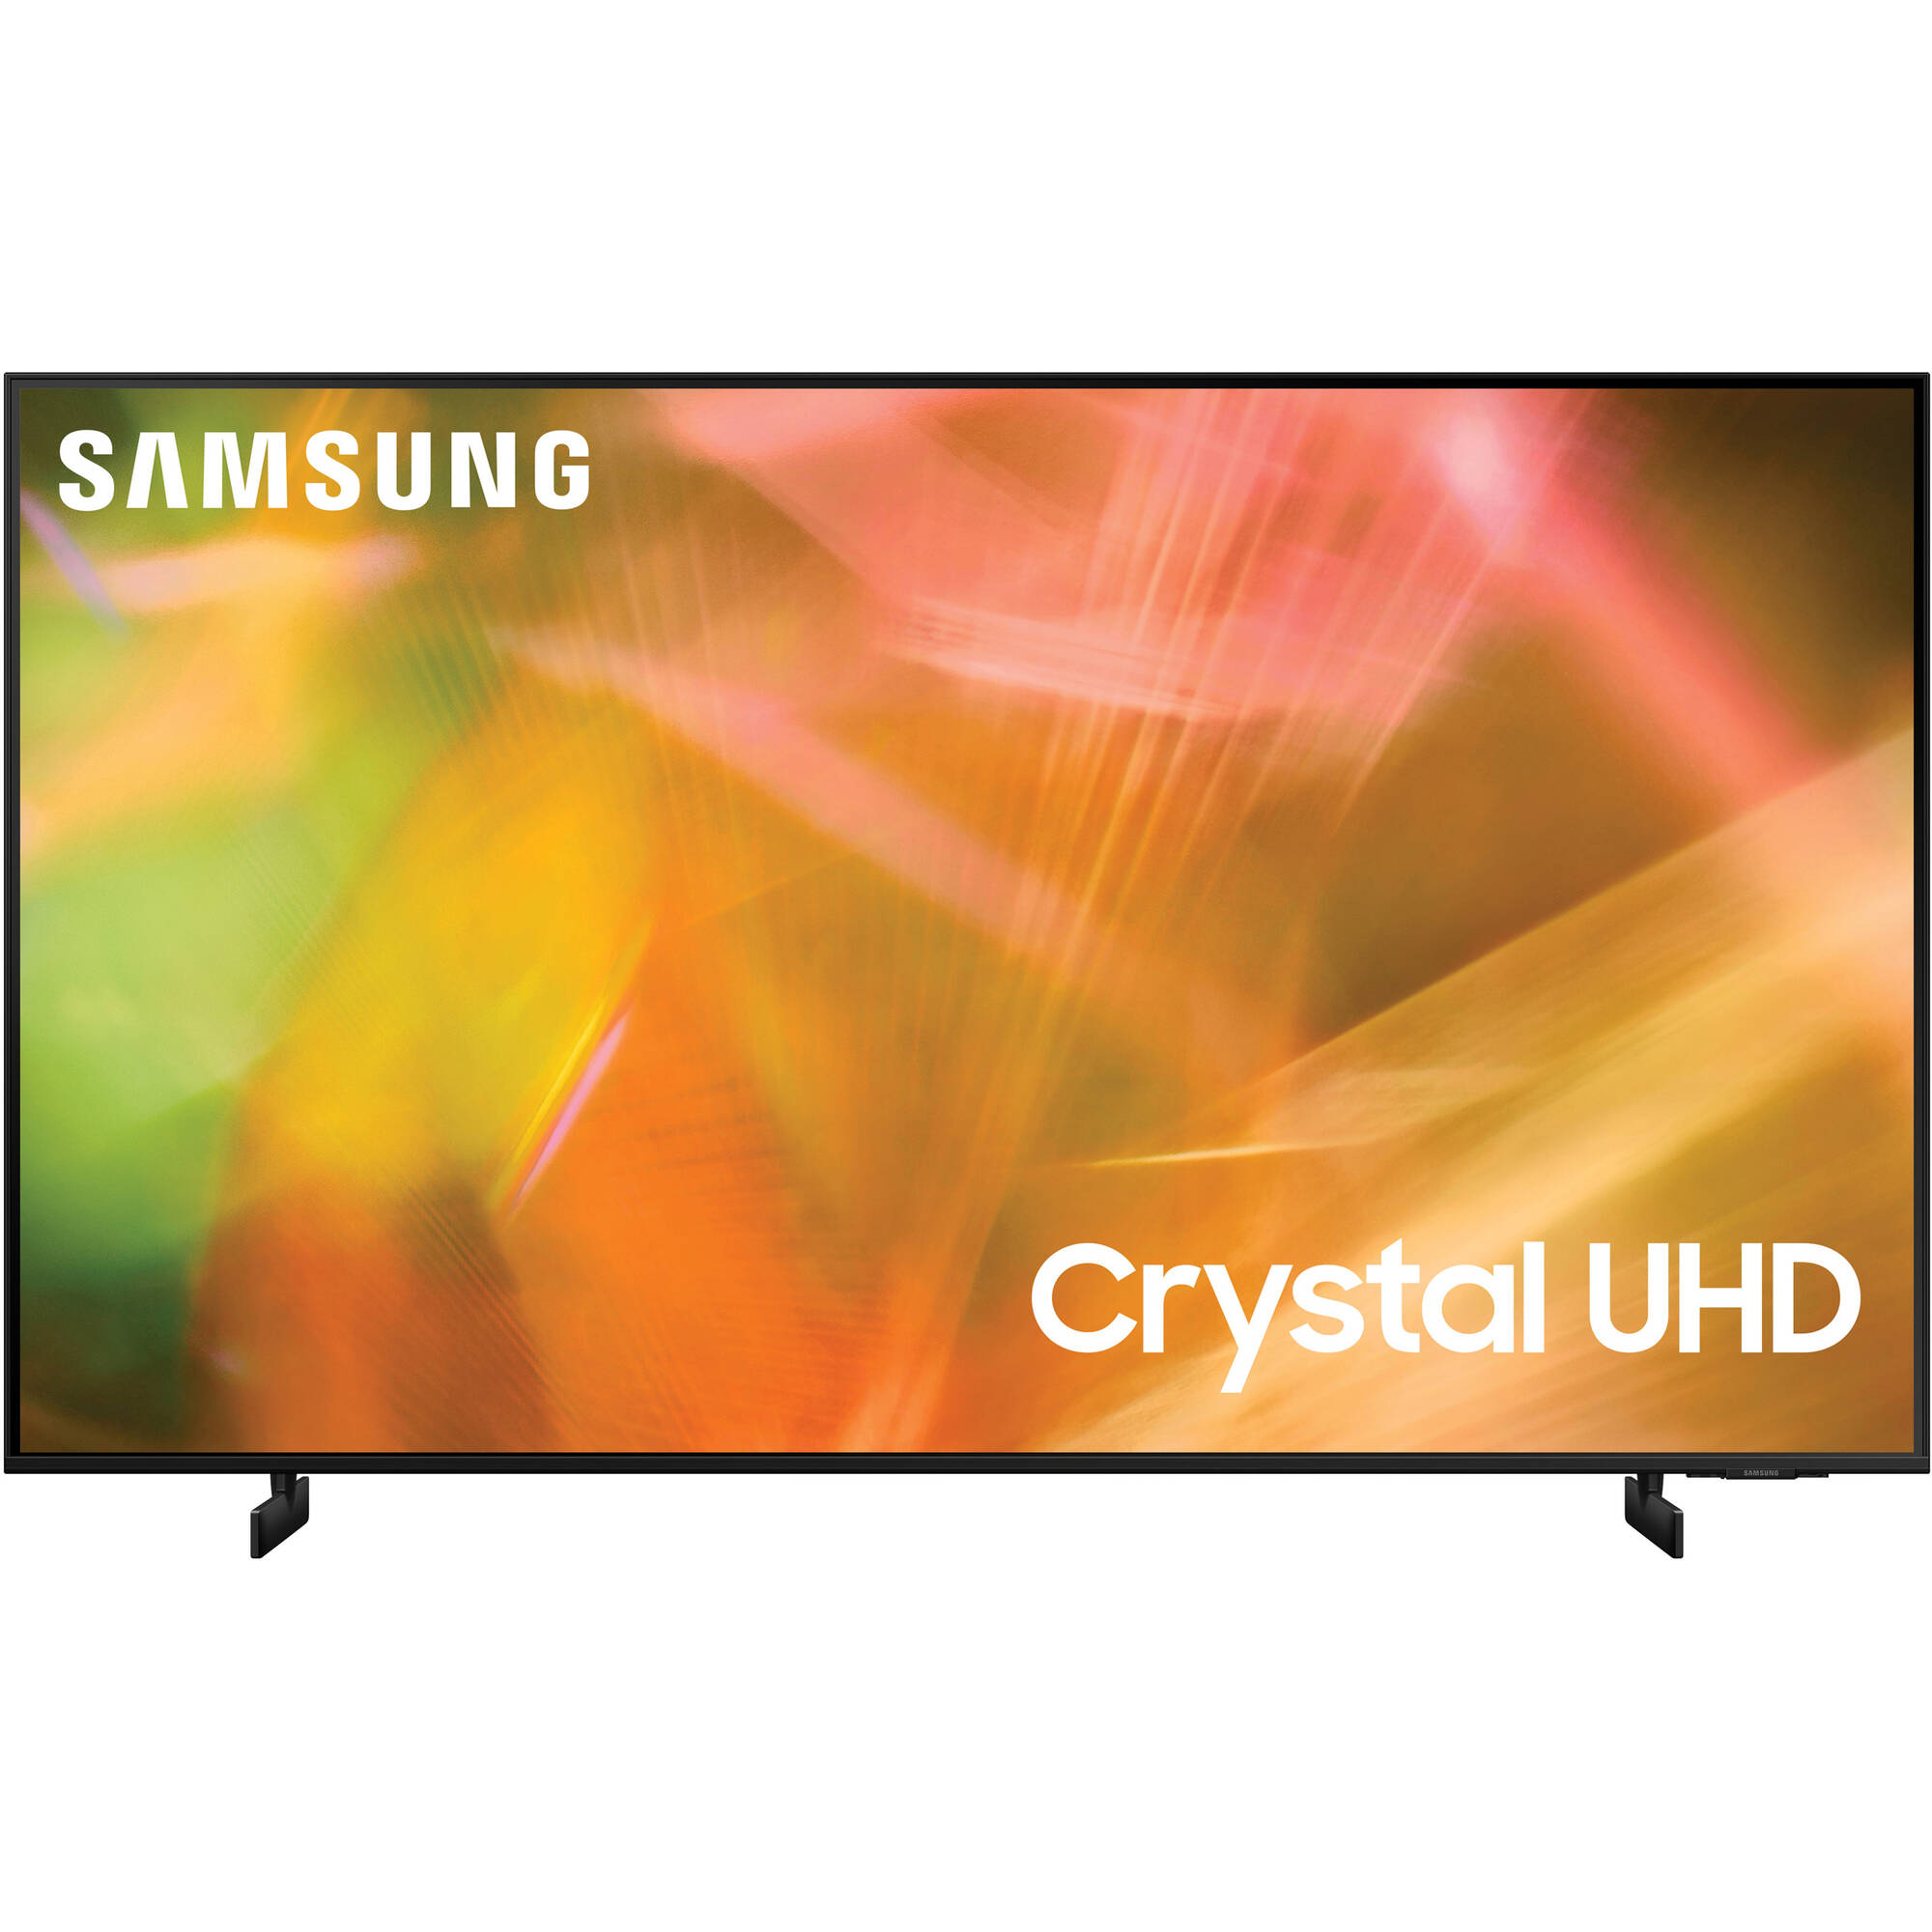 Samsung Au8000 85 "Clase HDR 4K UHD Smart LED TV